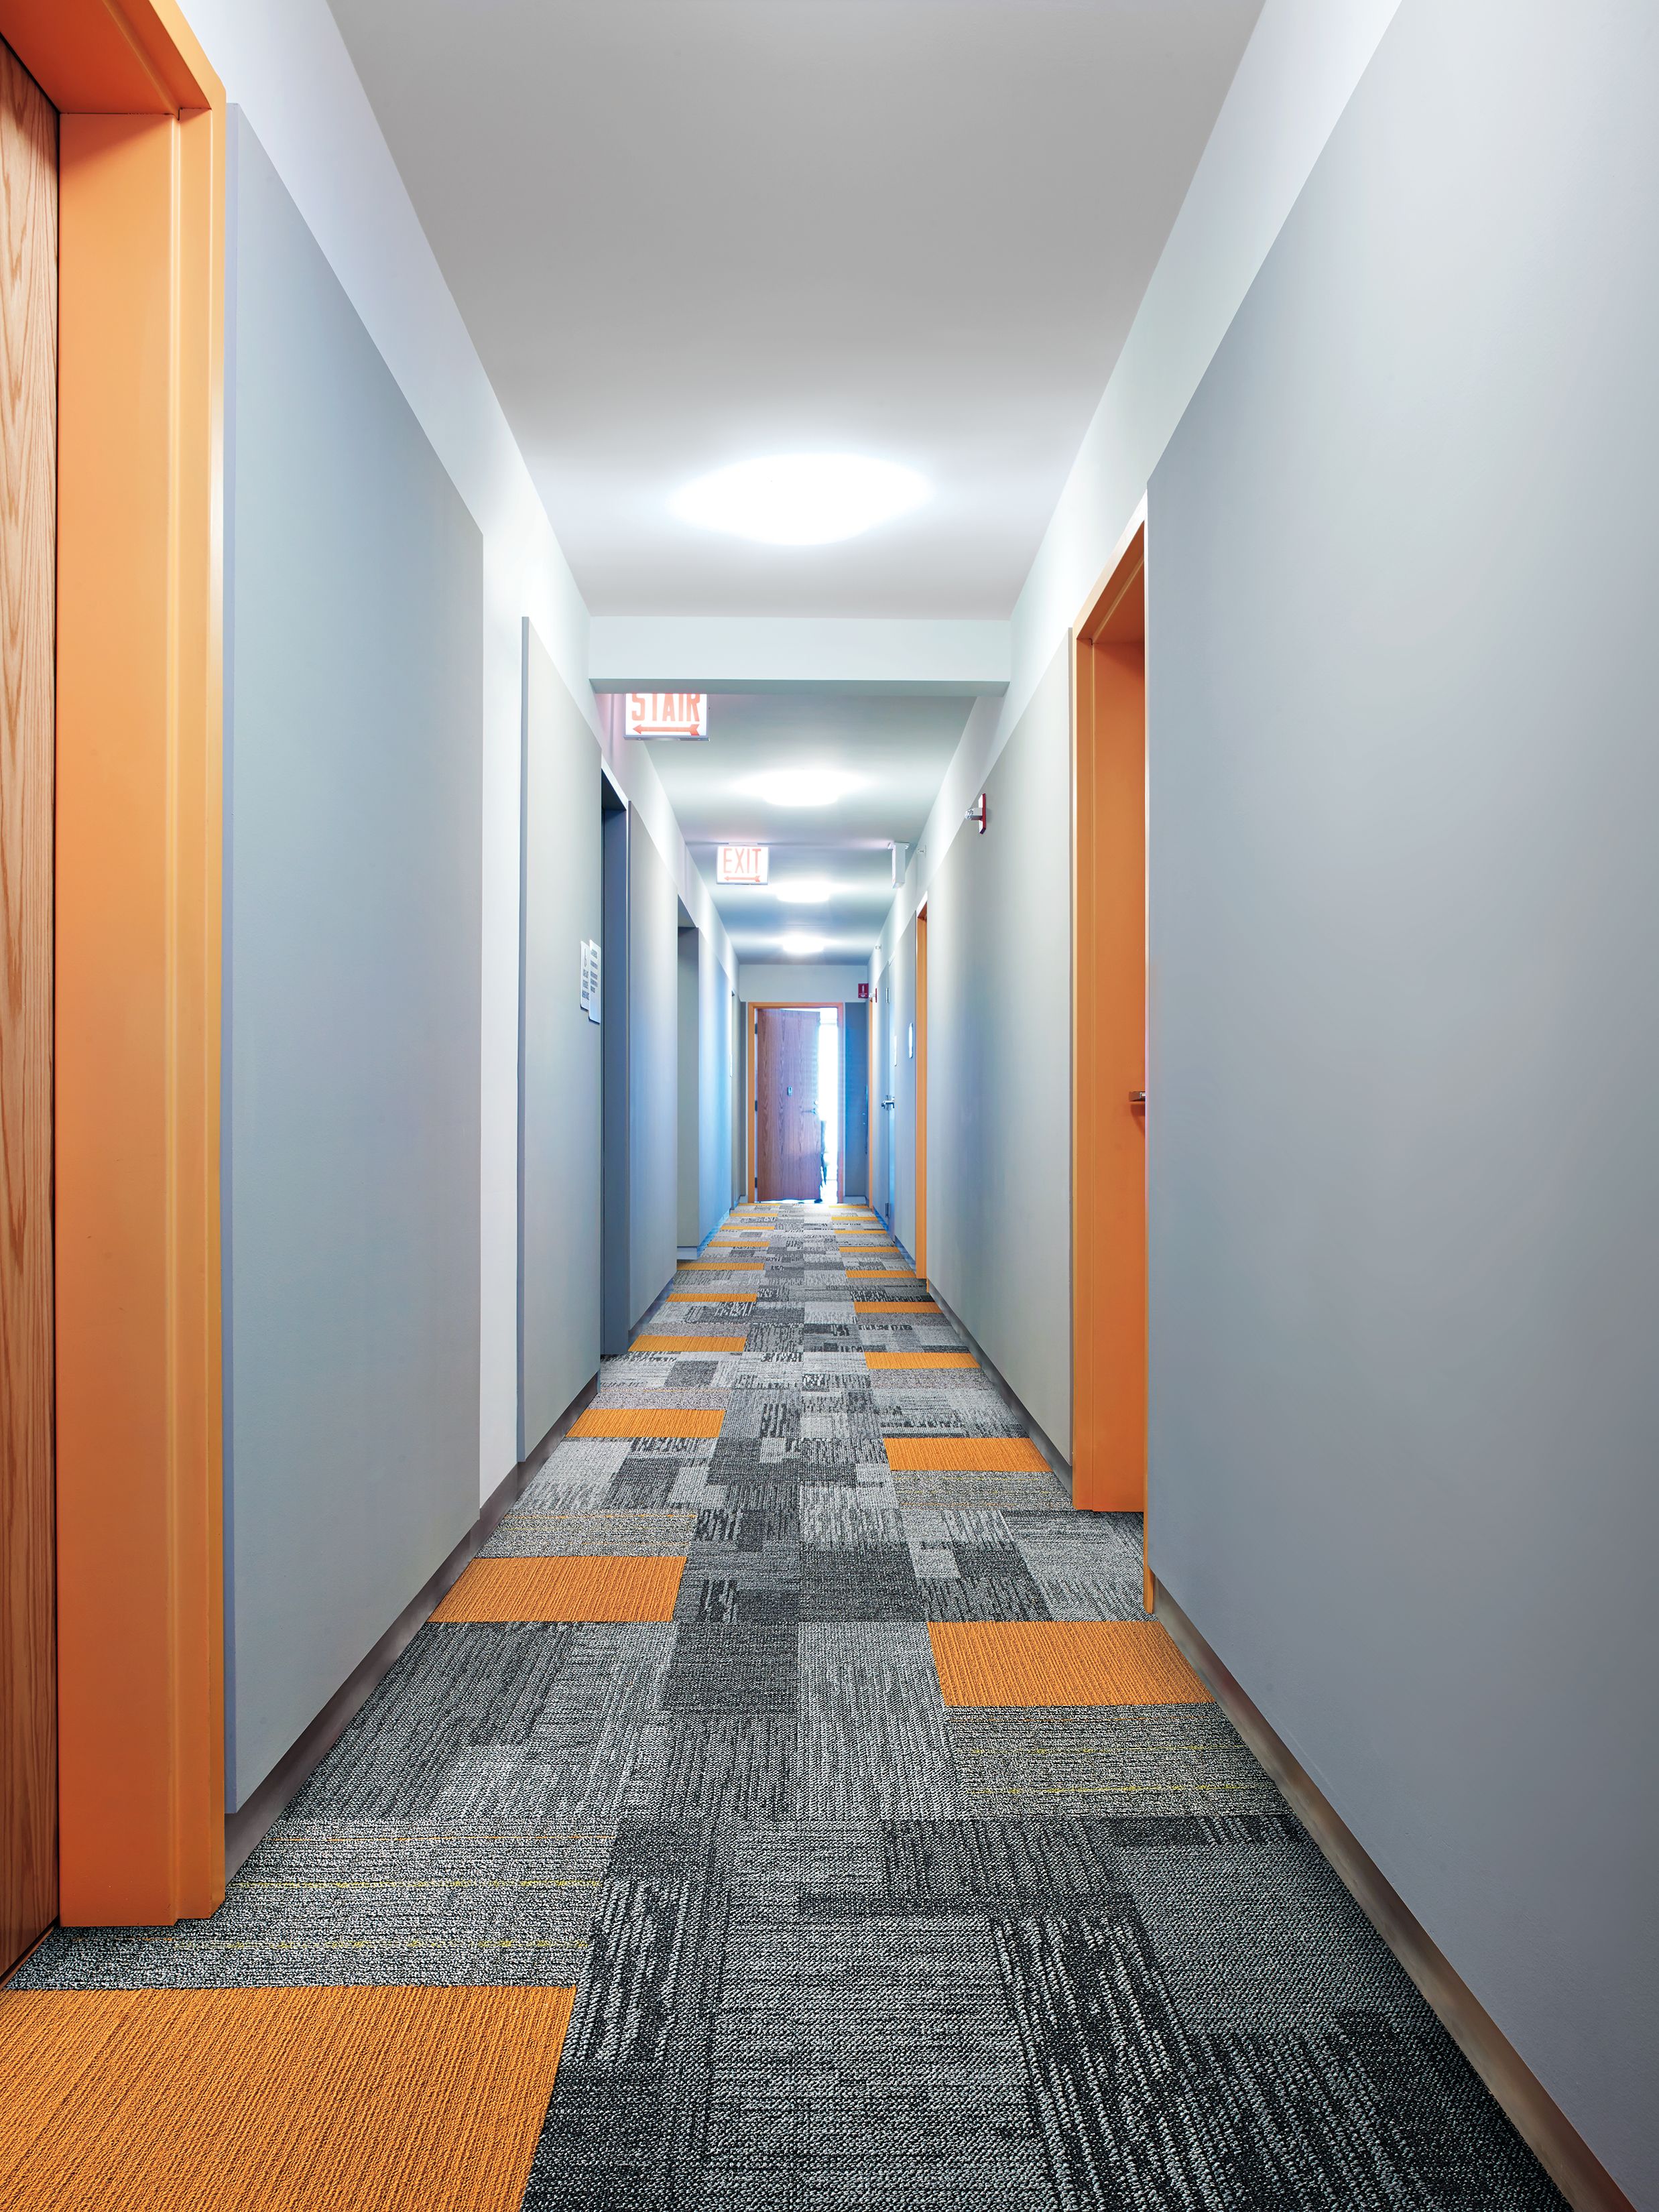 Interface Sidetrack carpet tile in a hallway imagen número 6